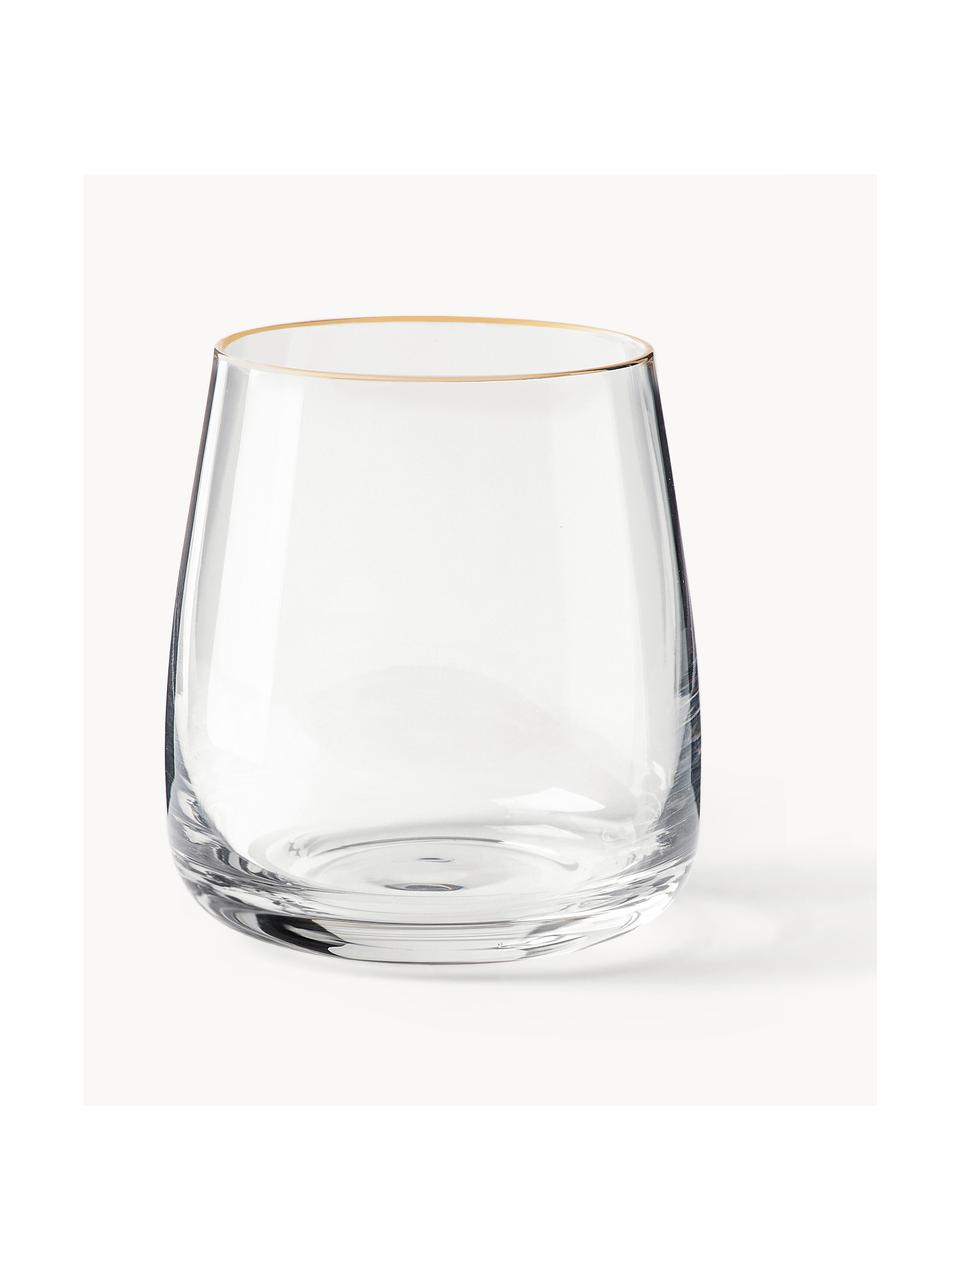 Mundgeblasene Wassergläser Ellery, 4 Stück, Glas, Transparent mit Goldrand, Ø 9 x H 10 cm, 370 ml